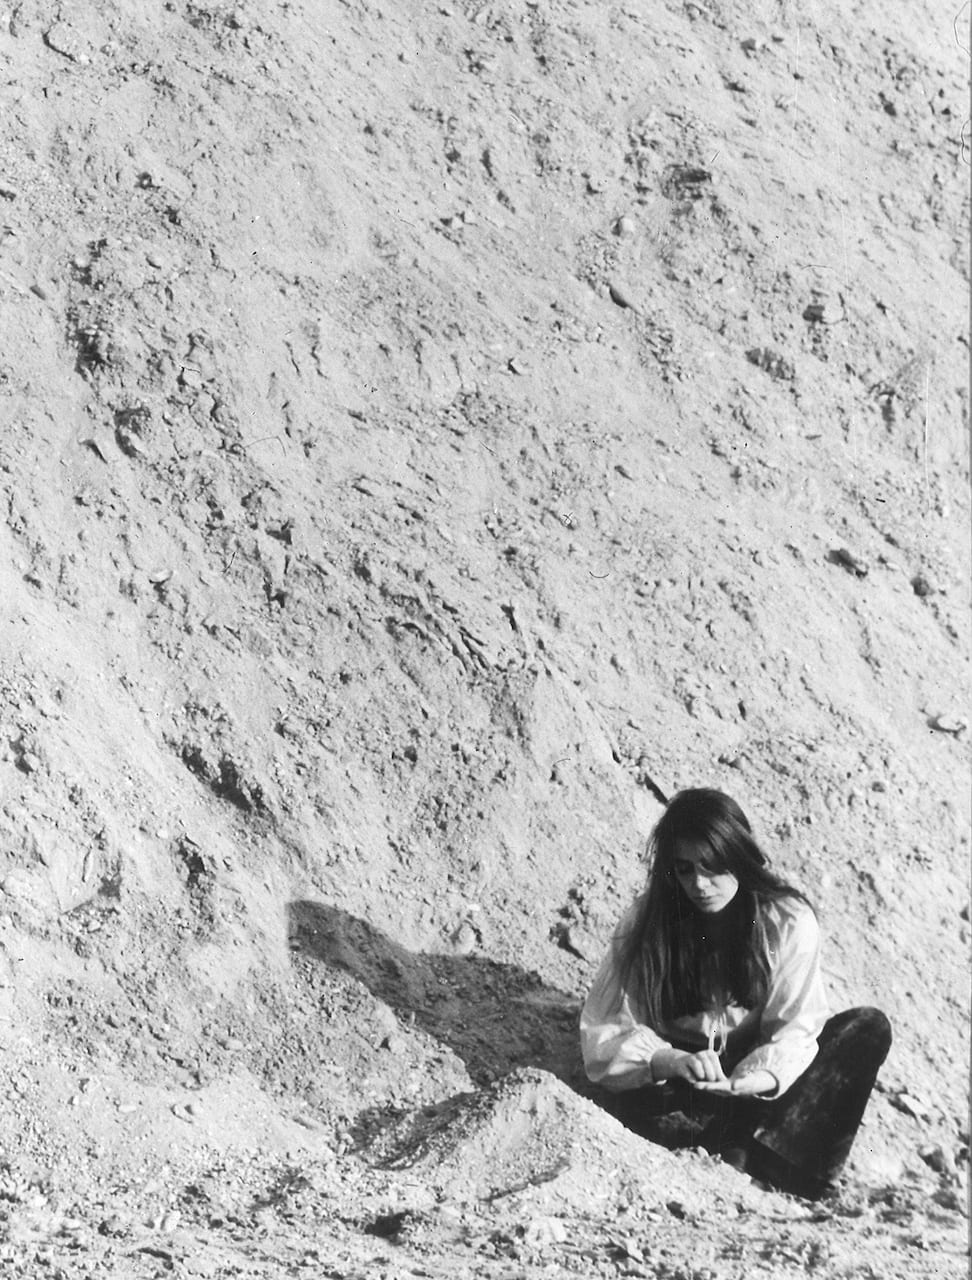 Laura Grisi The Measuring of Time, 1969 Film 16 mm in bianco e nero, sonoro, 5:45 Courtesy Laura Grisi Estate, Roma and P420, Bologna